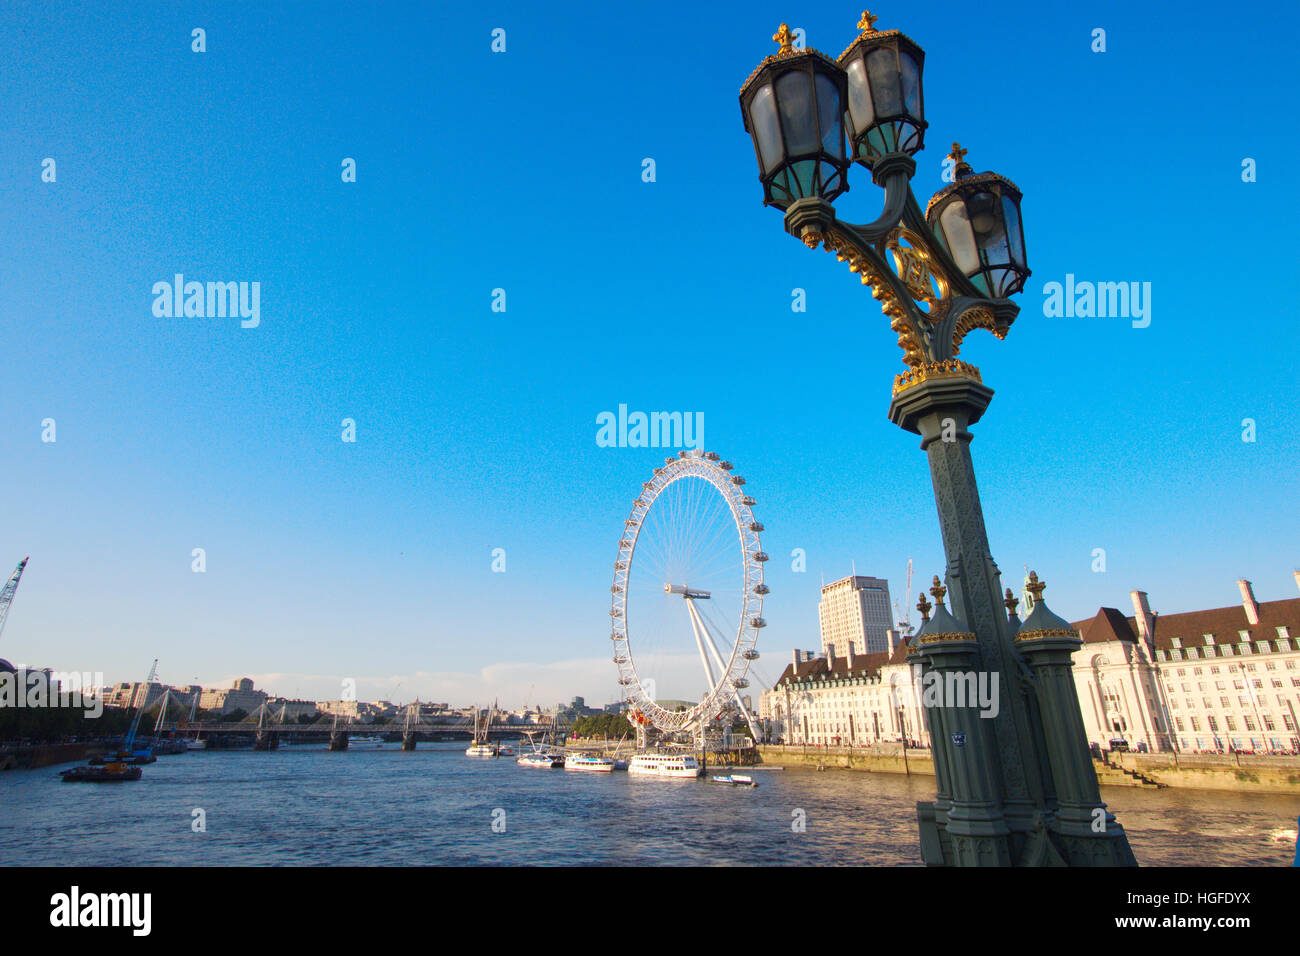 London Eye and Lantern in London Stock Photo